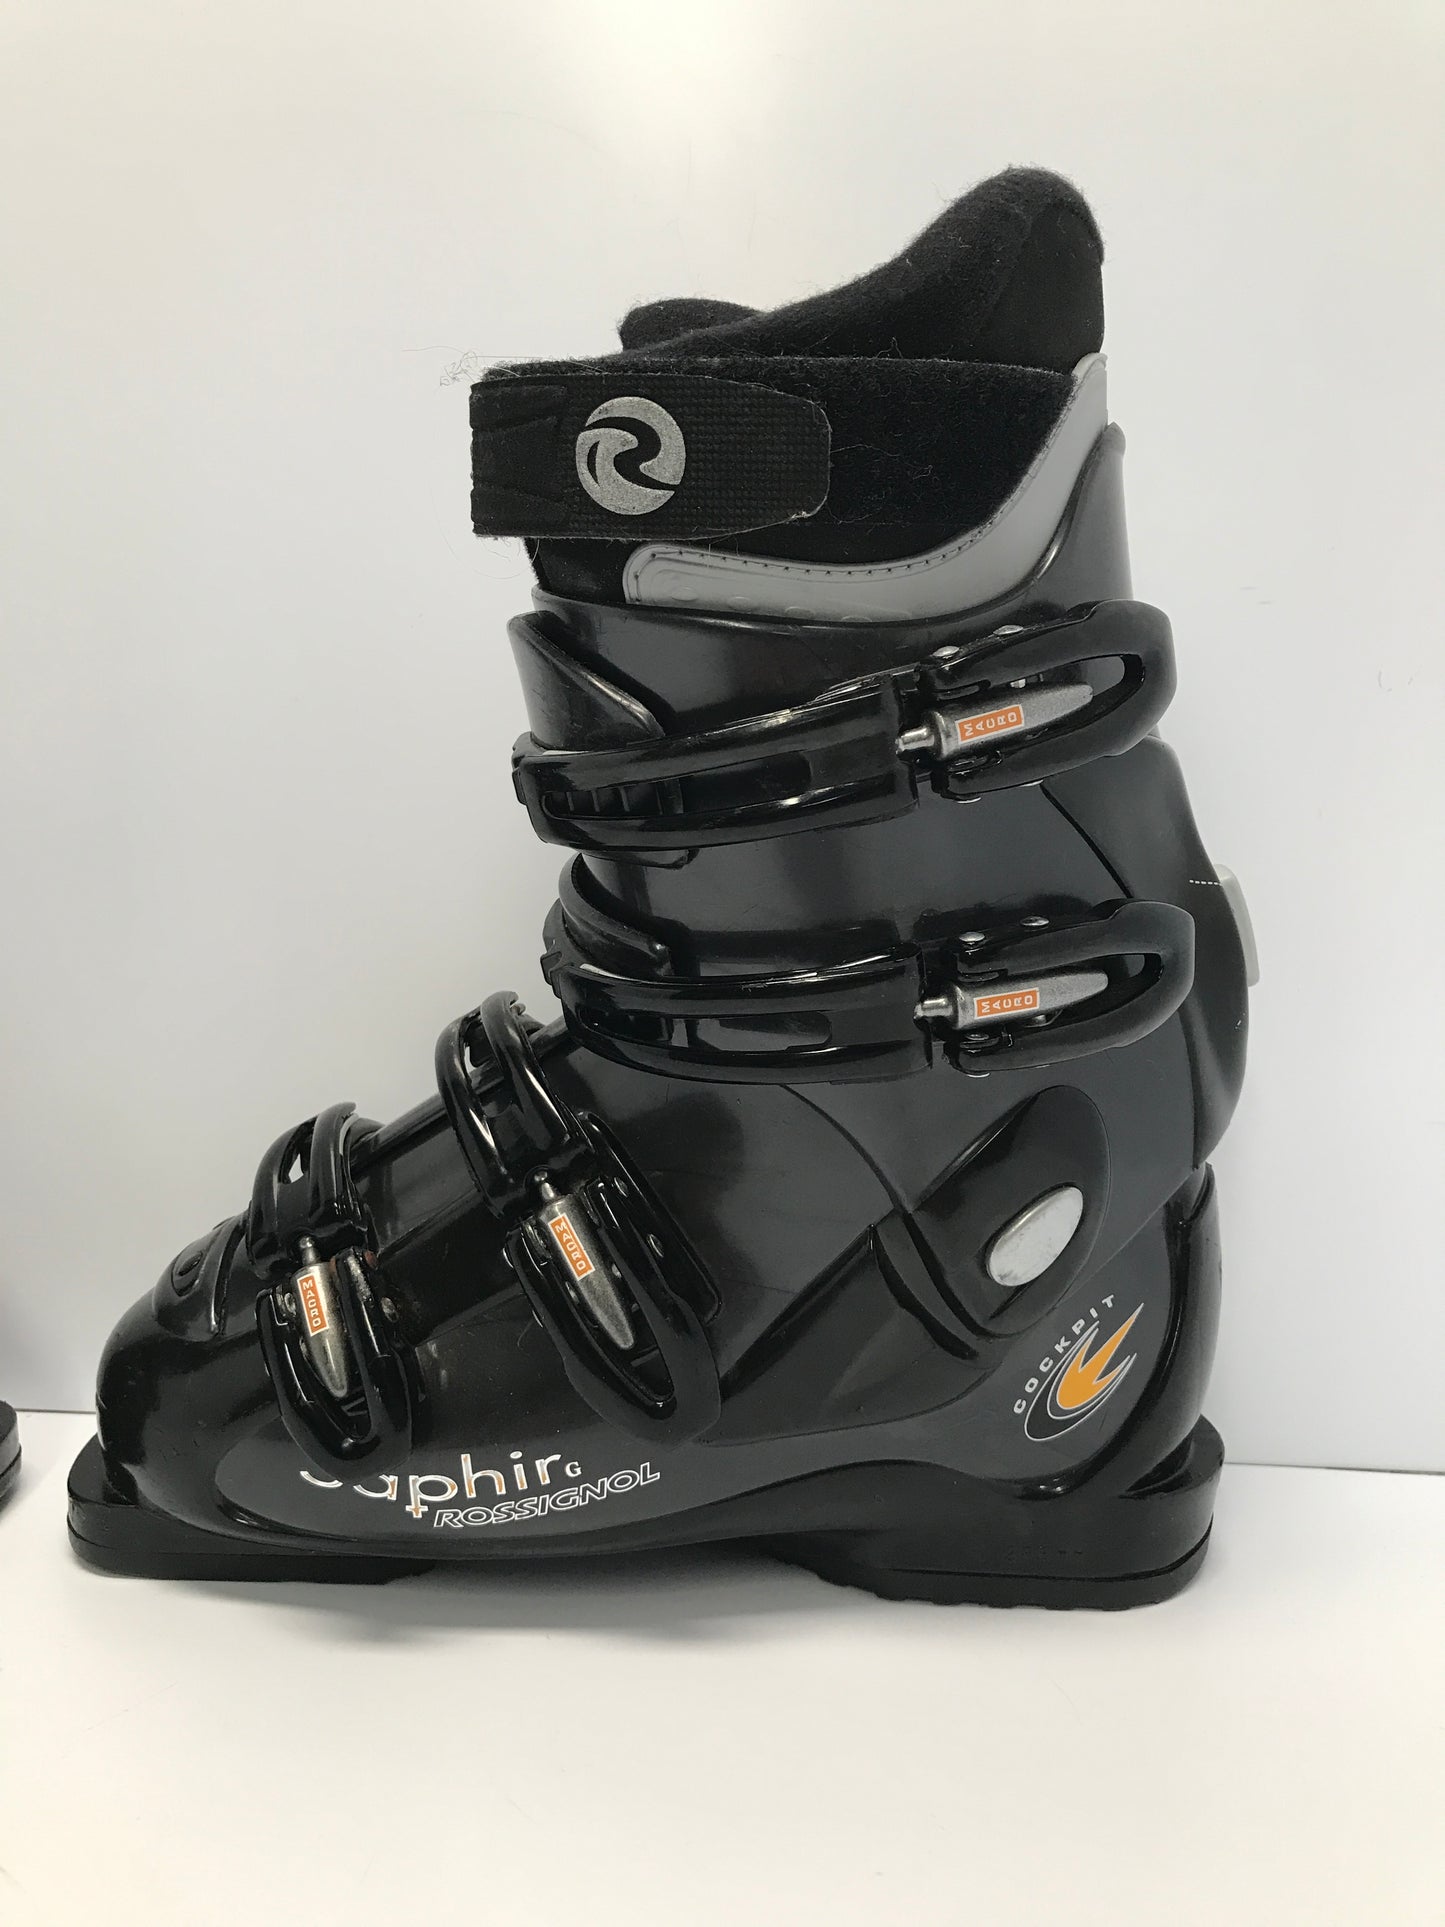 Ski Boots Mondo Size 24.5 Ladies Women's Size 6 285 mm Walk Ski Mode Black Excellent